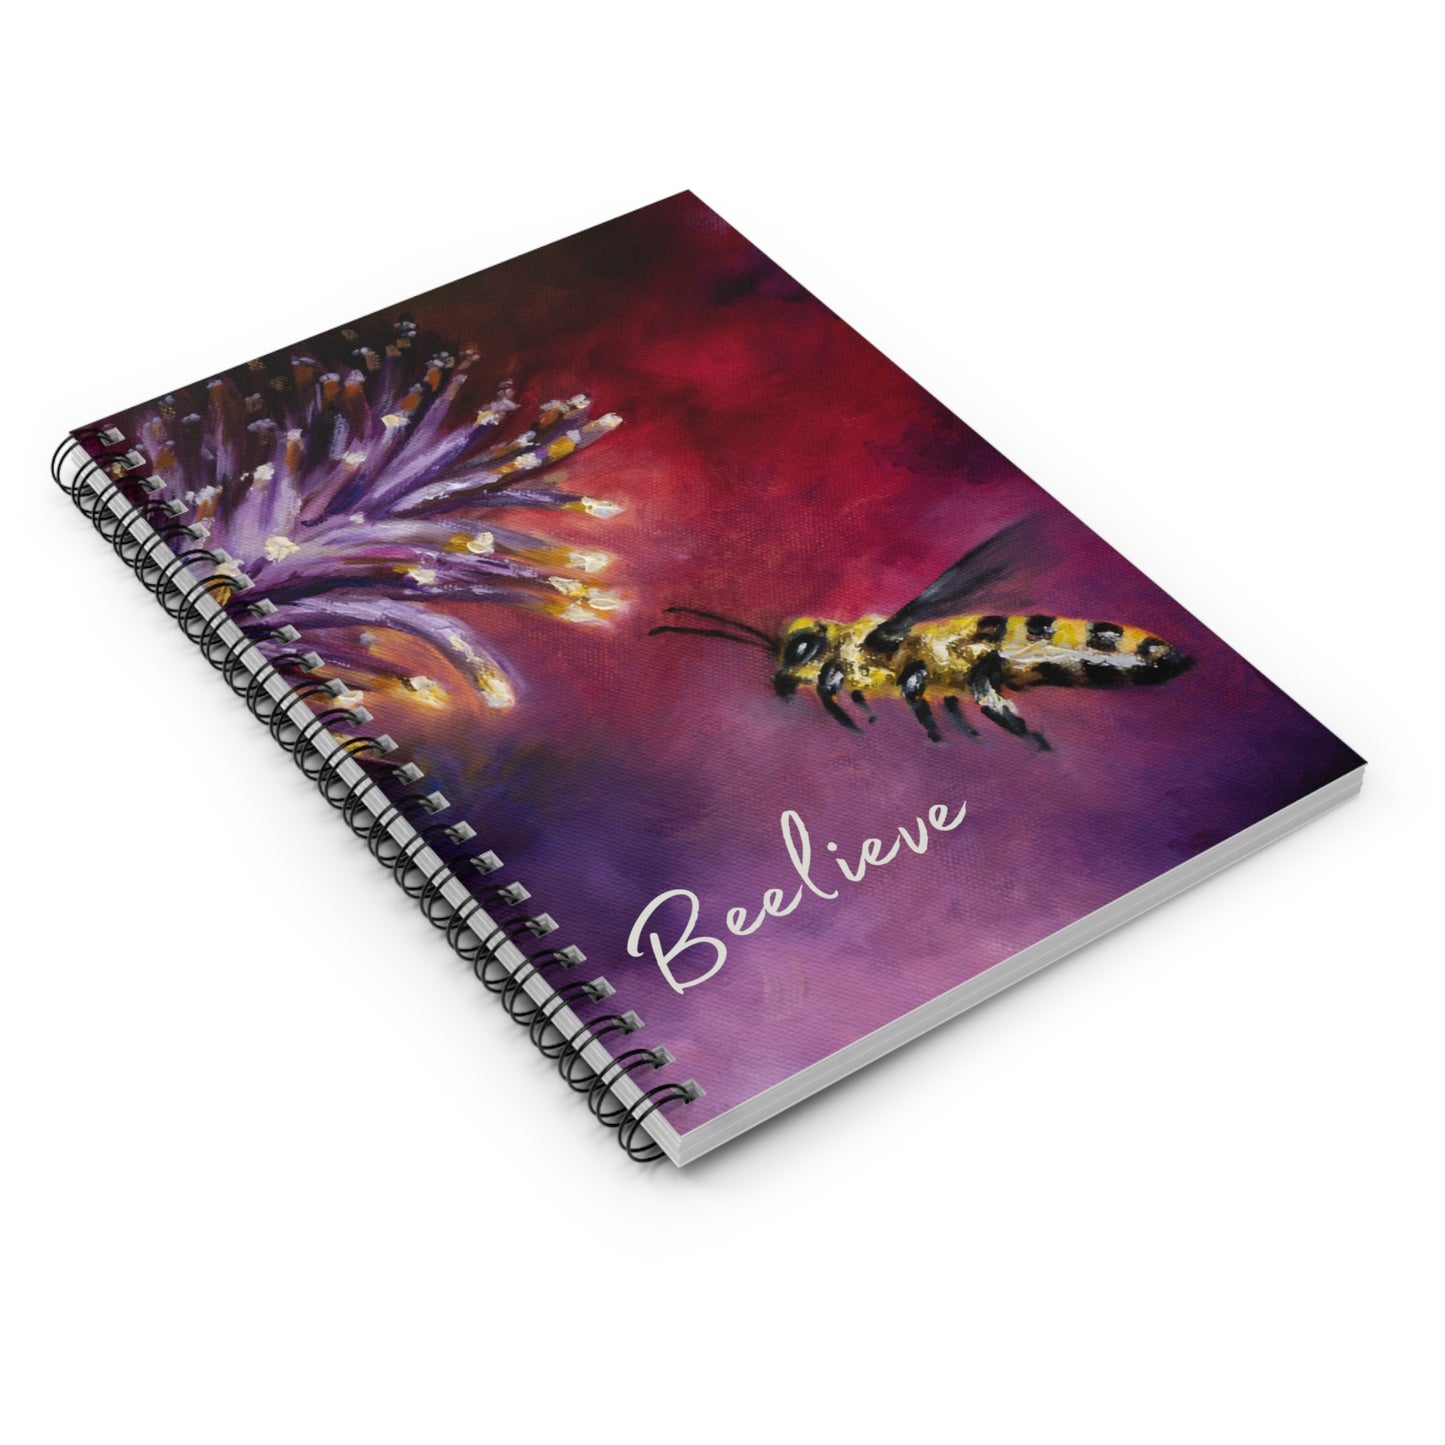 Bee - Inspirational Notebook or Bullet Journal